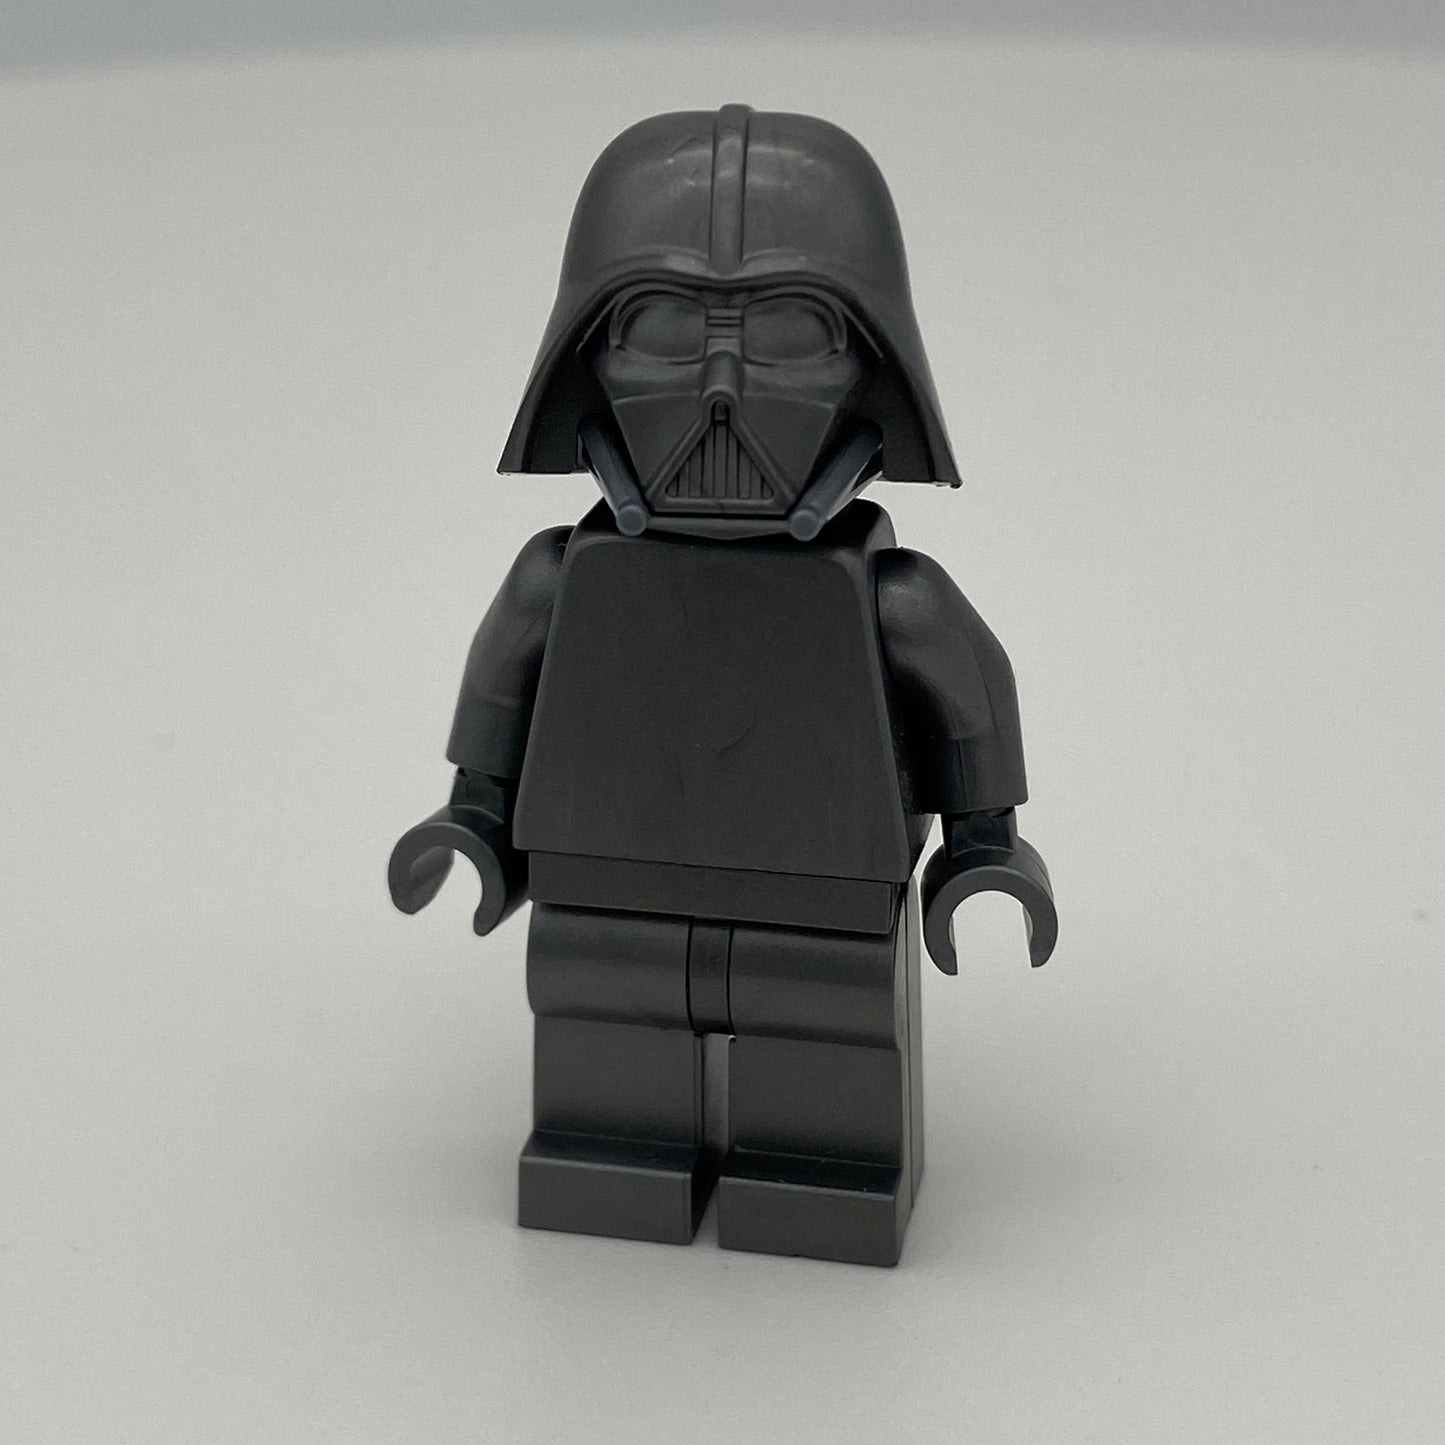 Prototype Silver Darth Vader Monochrome - Authentic Lego Minifigure